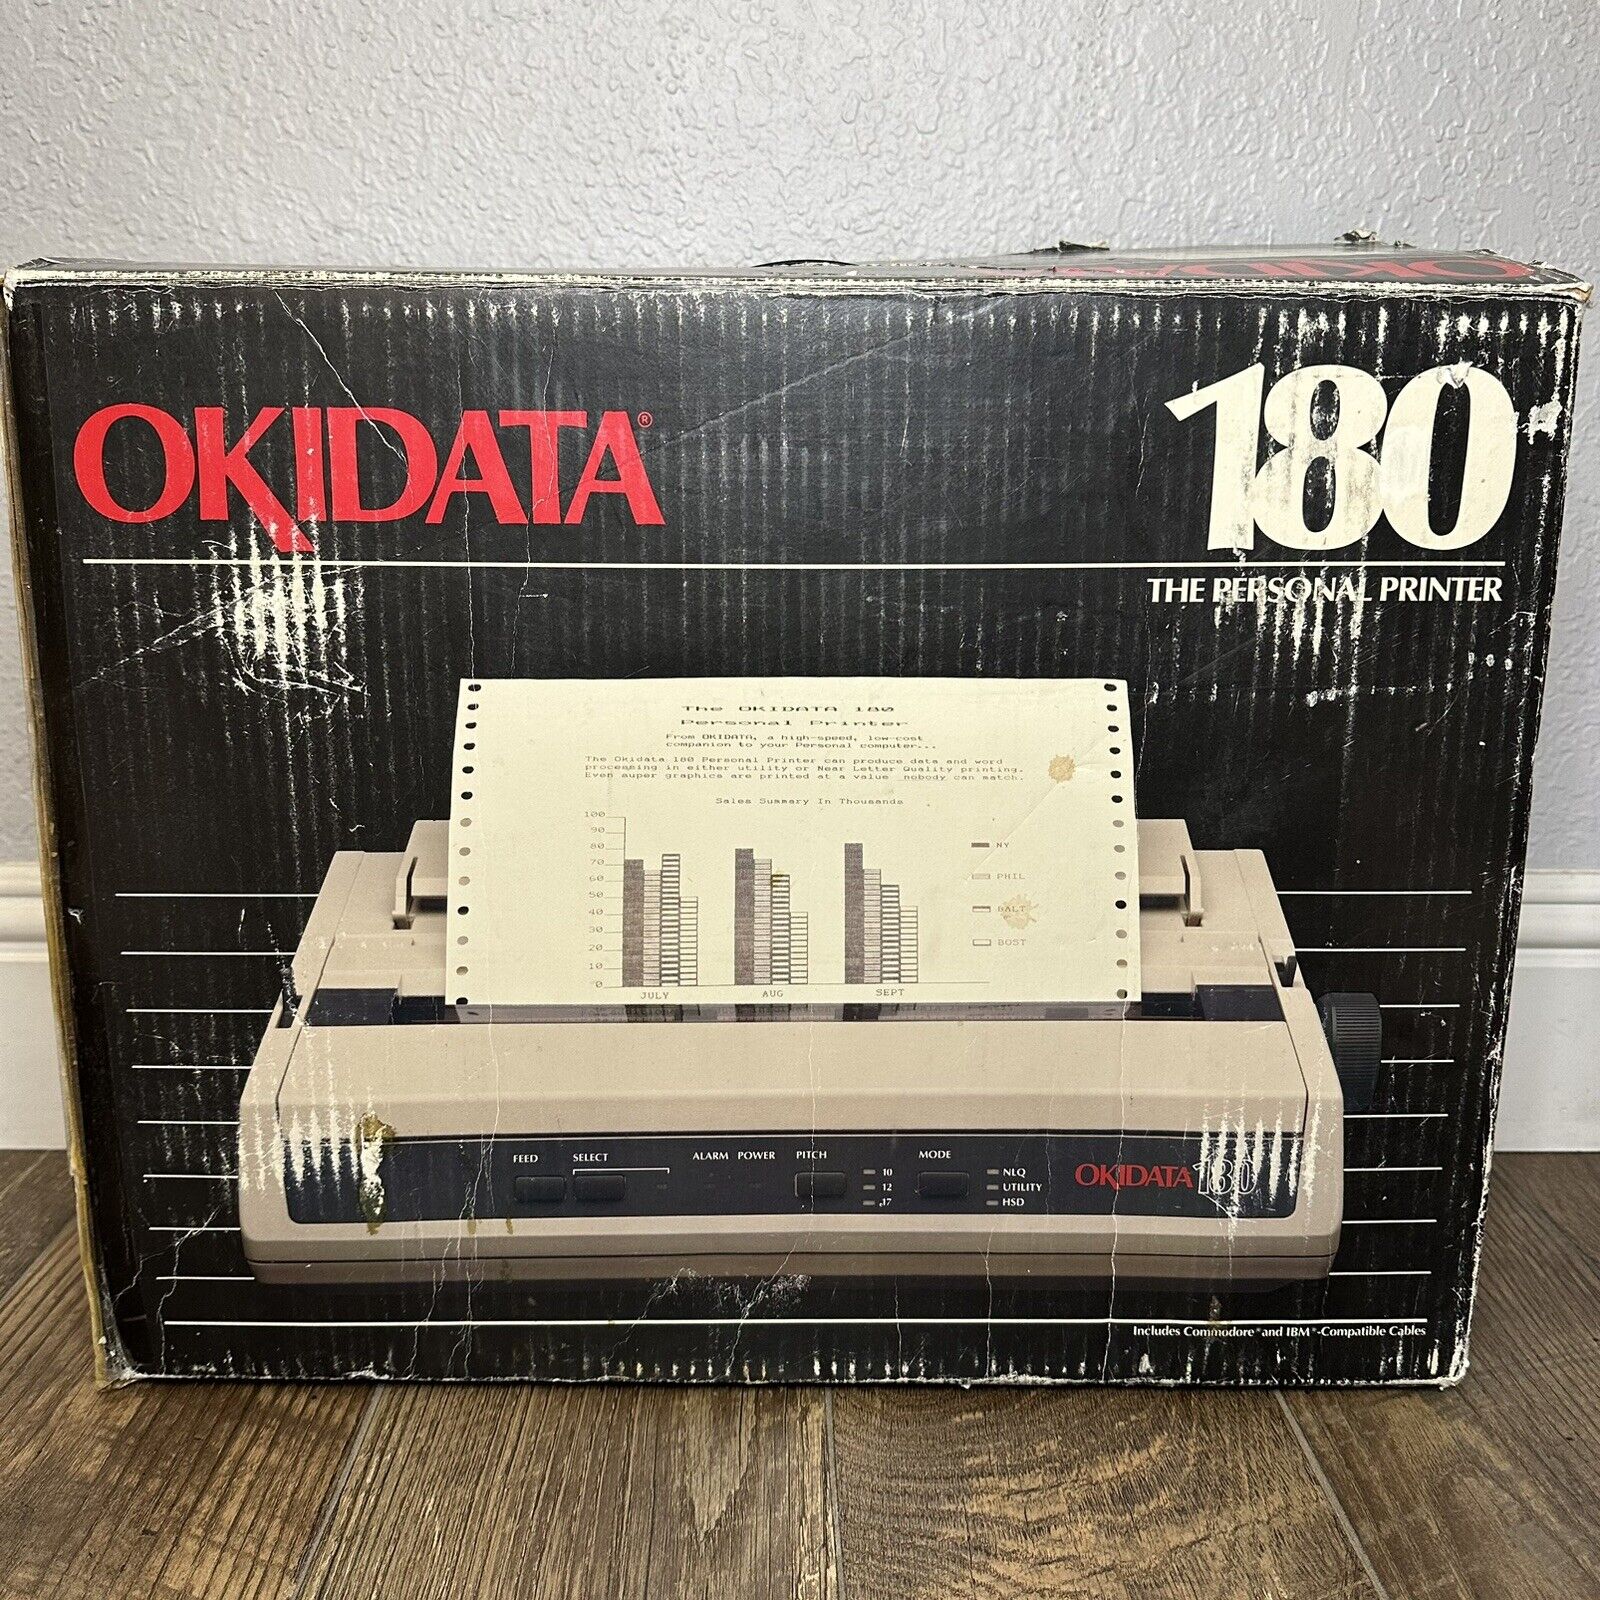 Okidata 180 “The Personal Printer” New Open Box Vintage